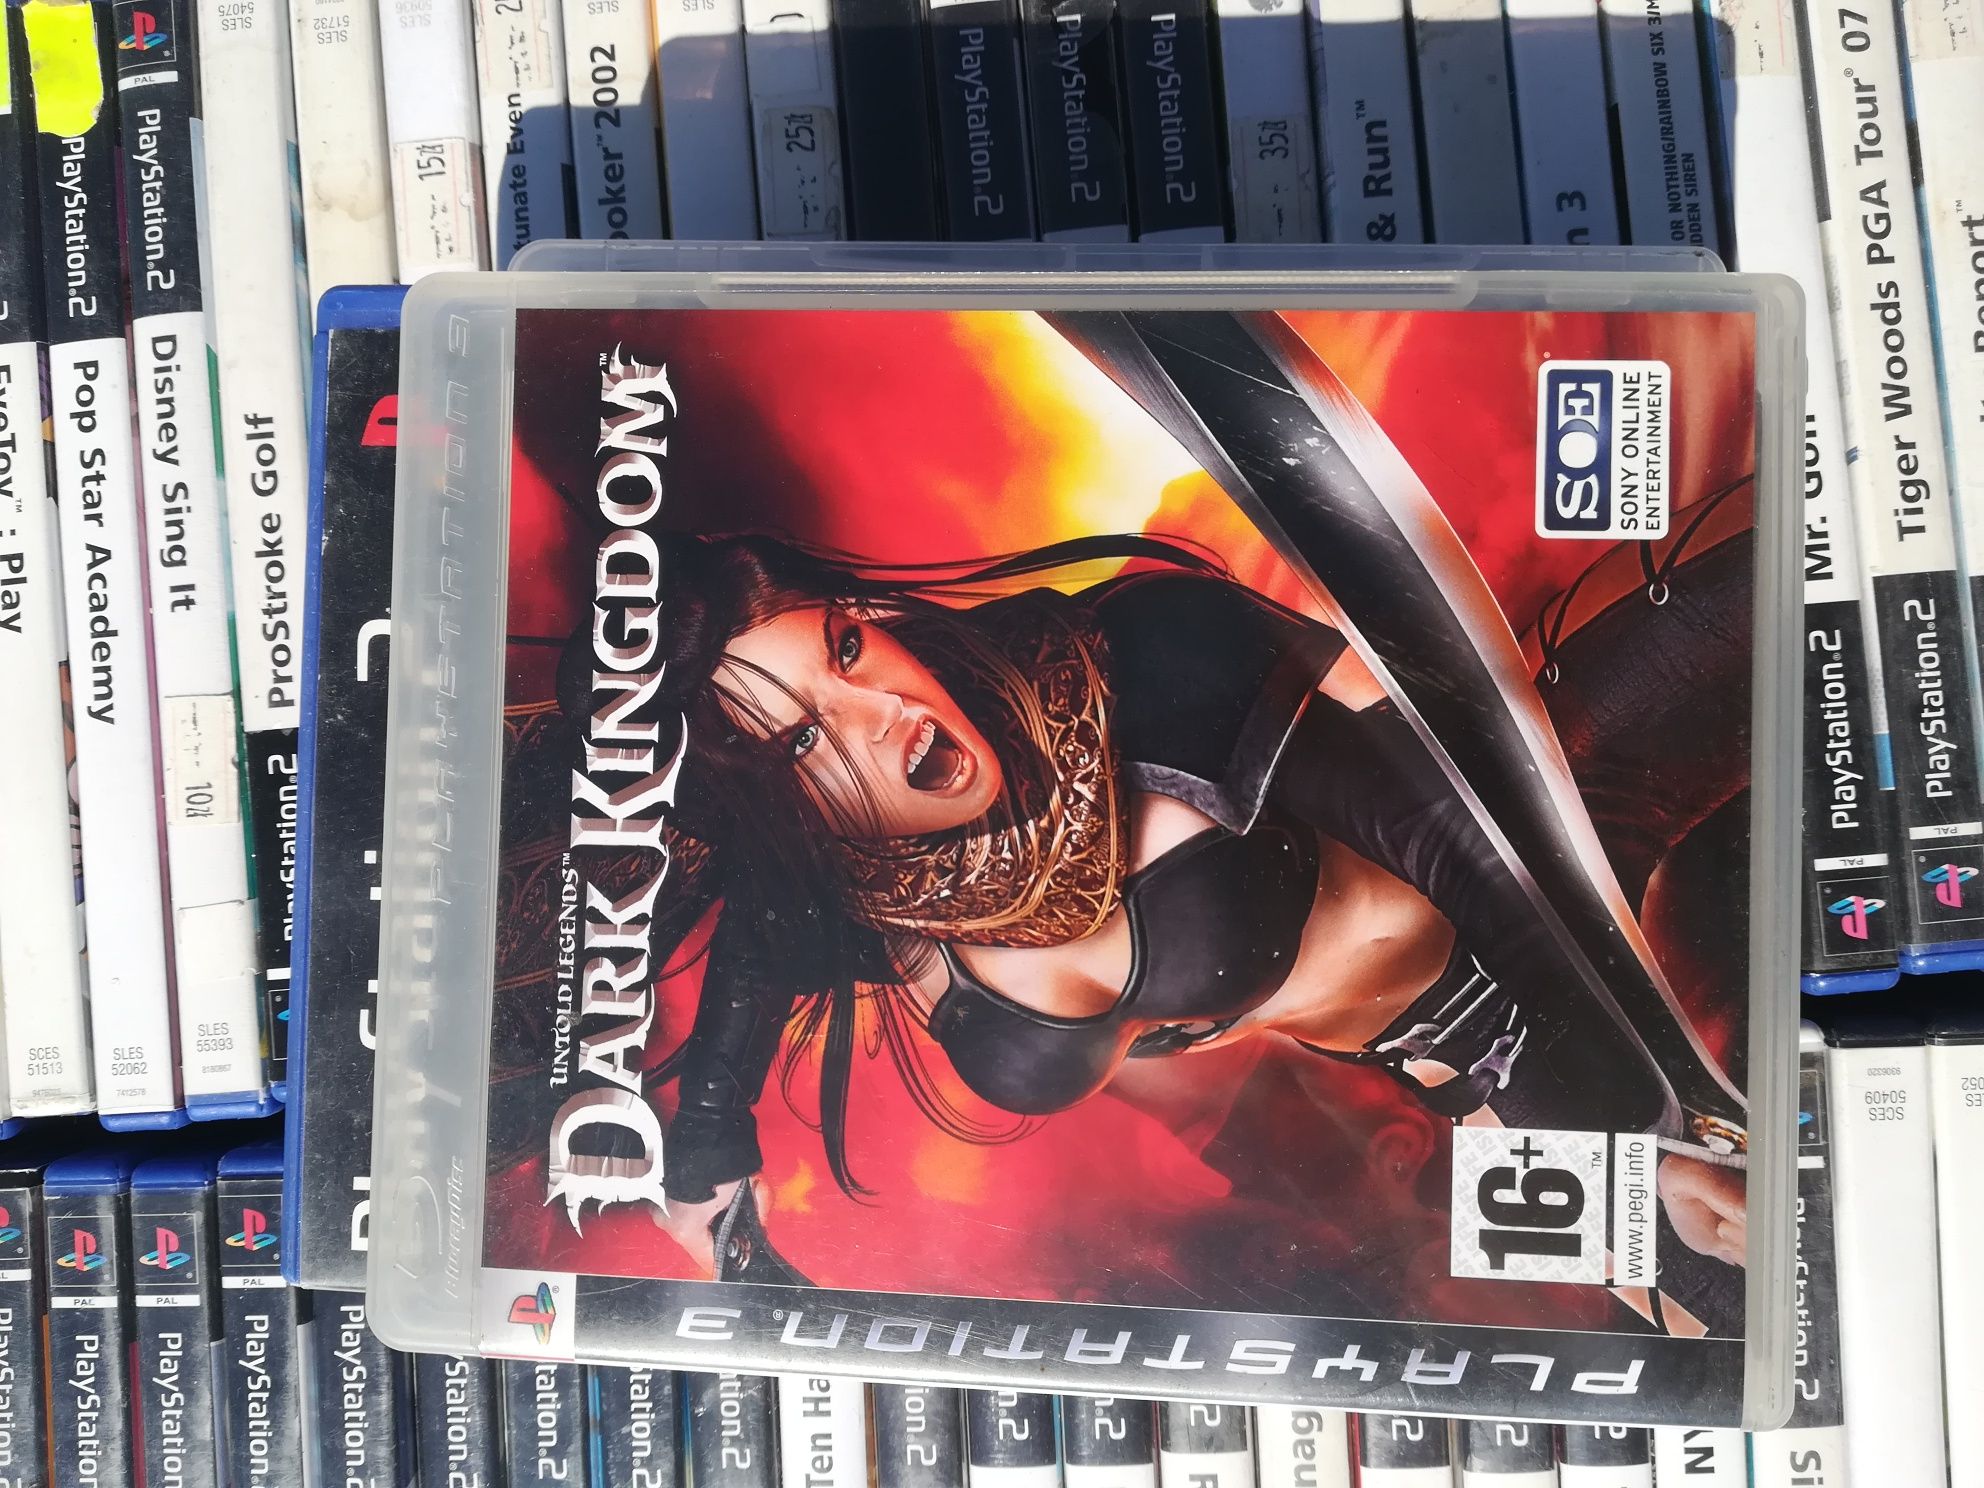 Untold dark kingdom ps3 PlayStation 3